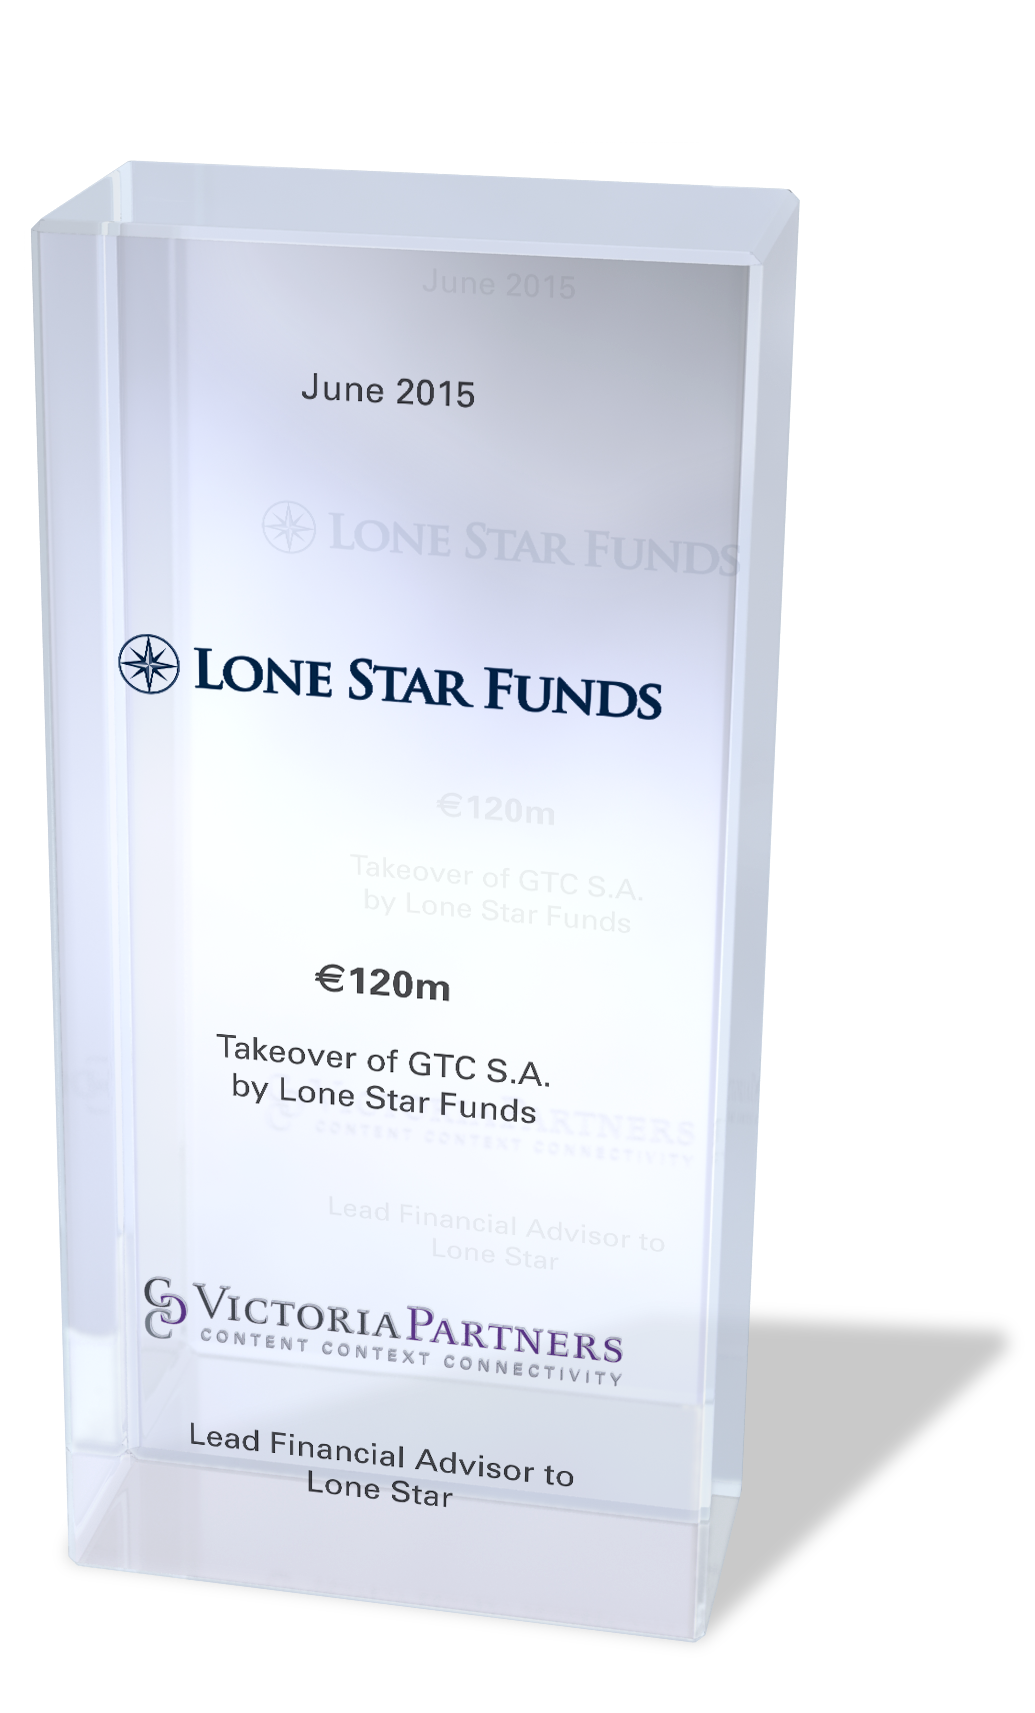 VICTORIAPARTNERS - Lead Financial Advisor to Lone Star - June 2015